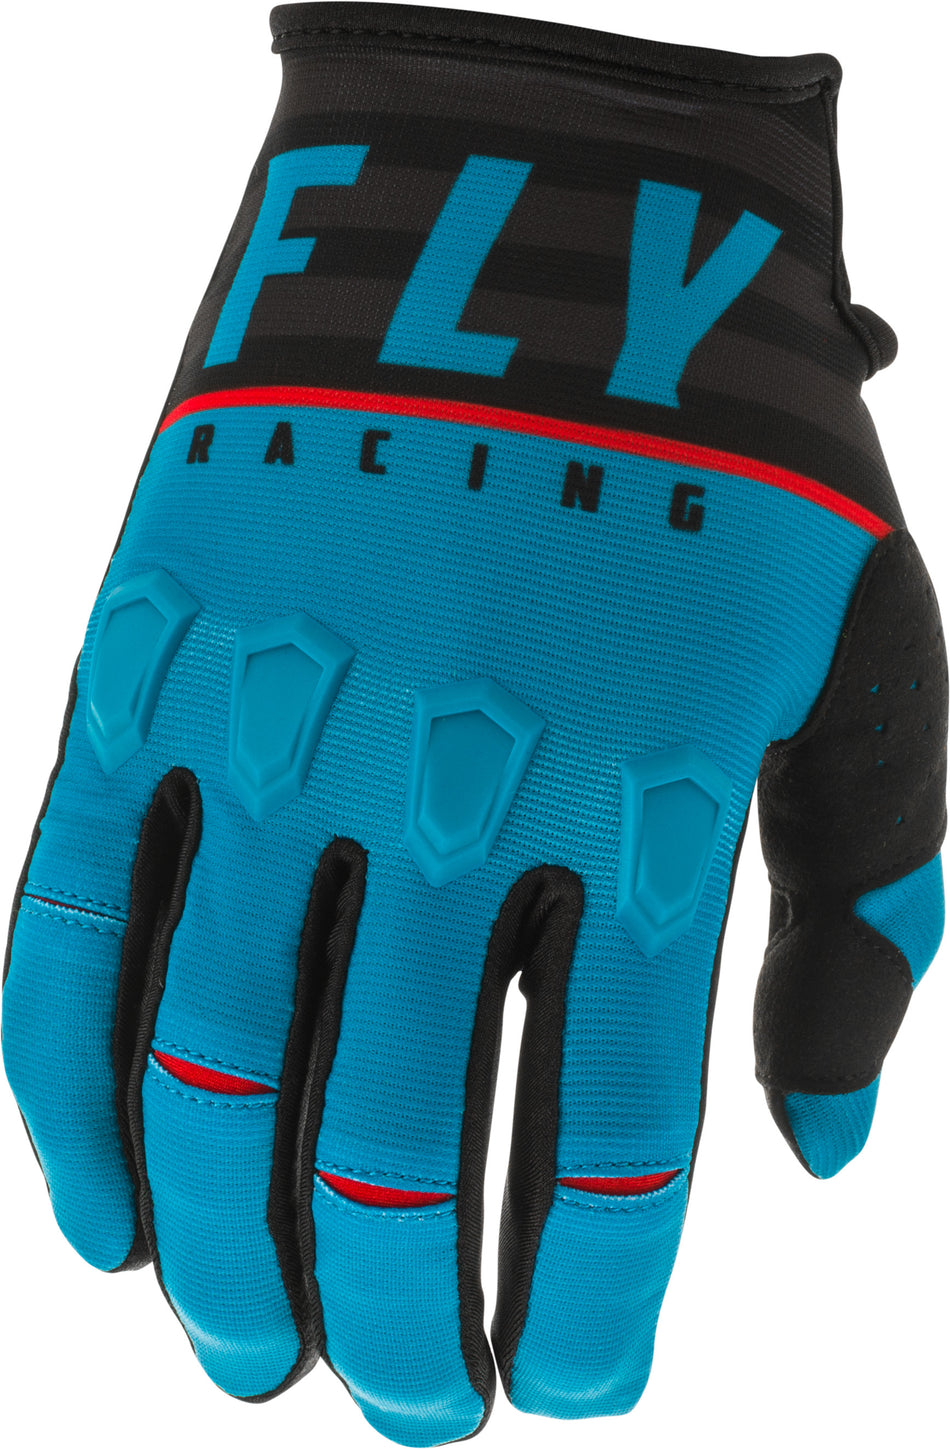 FLY RACING Kinetic K120 Gloves Blue/Black/Red Sz 07 373-41907